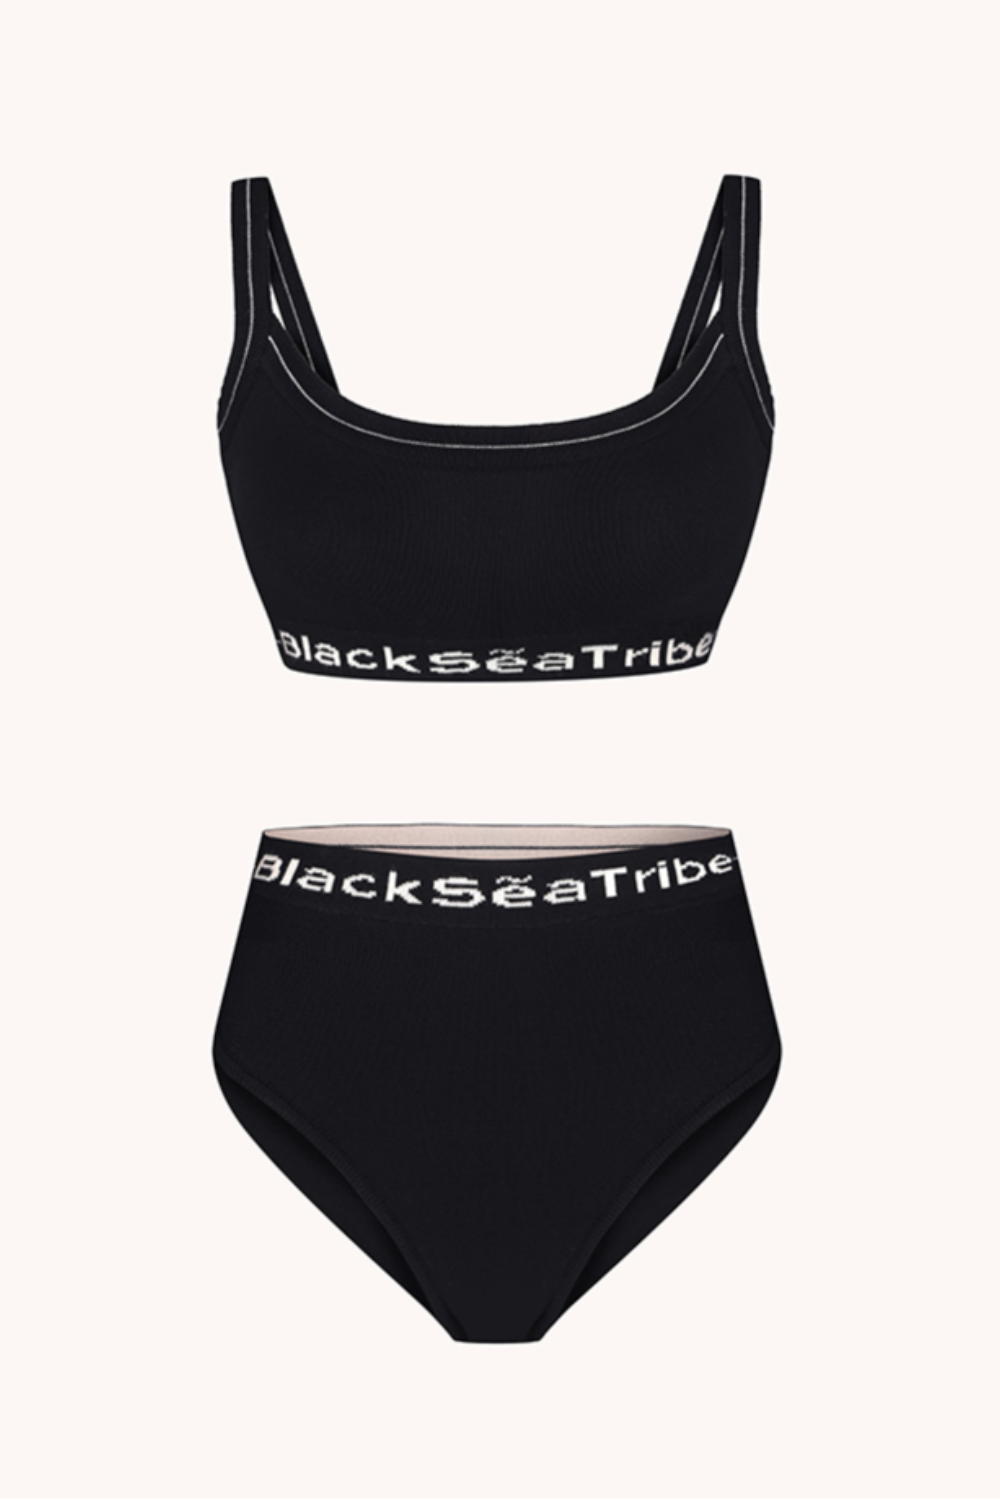 Underwear &quot;Knitted&quot;, black, (BlackSeaTribe), whitenessKNITTEDblack